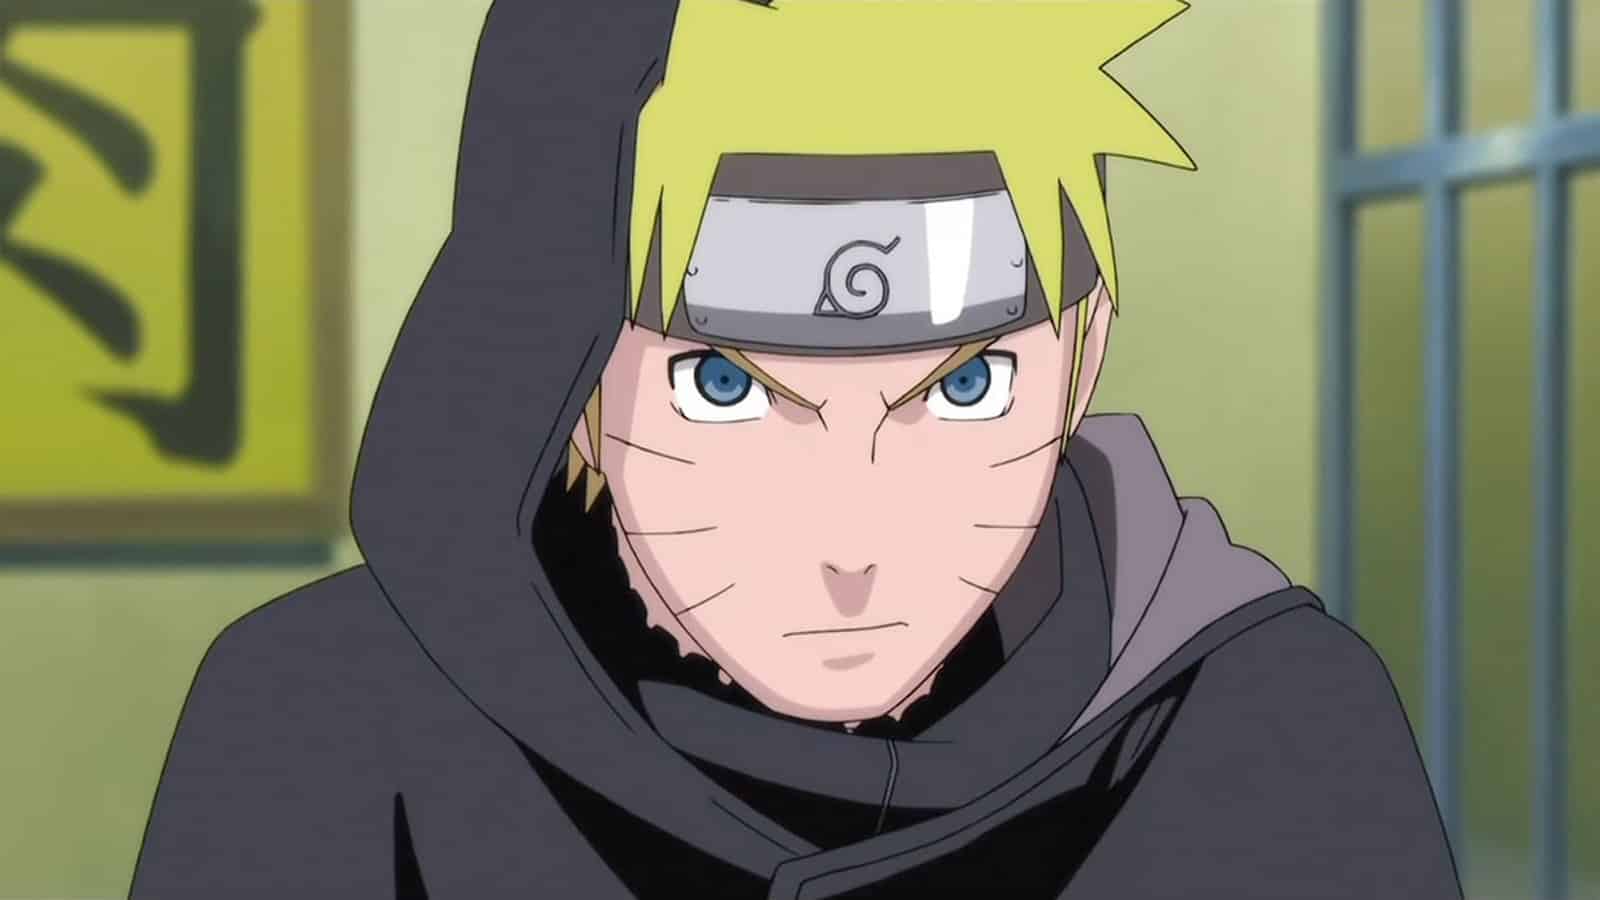 Skin Naruto arrive dans Fortnite